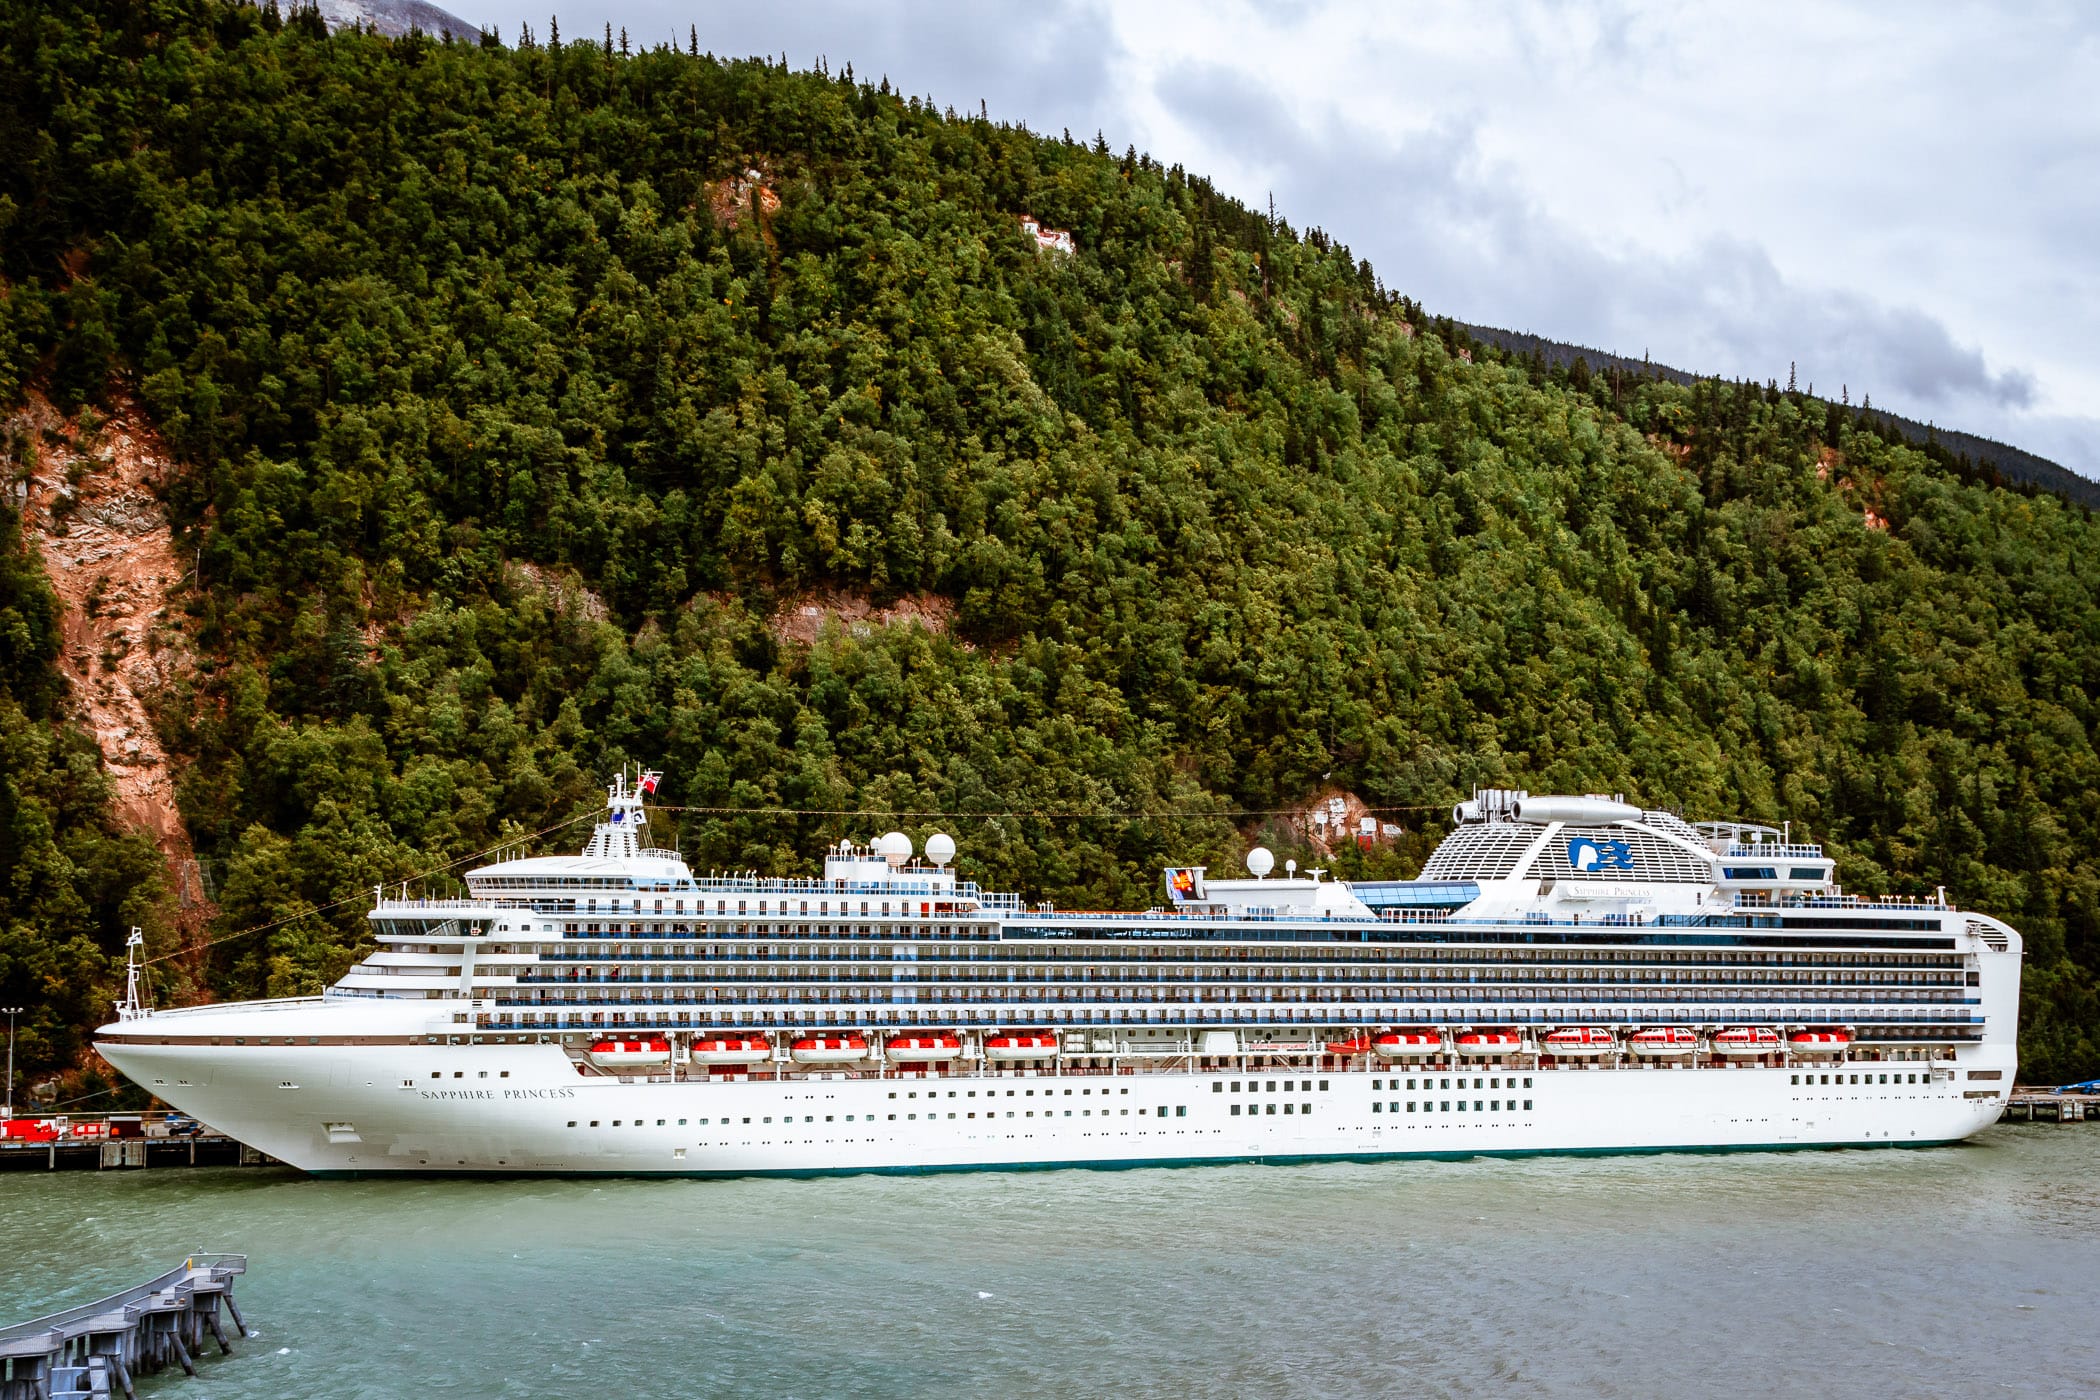 The cruise ship Sapphire Princess, docked in Skagway, Alaska.